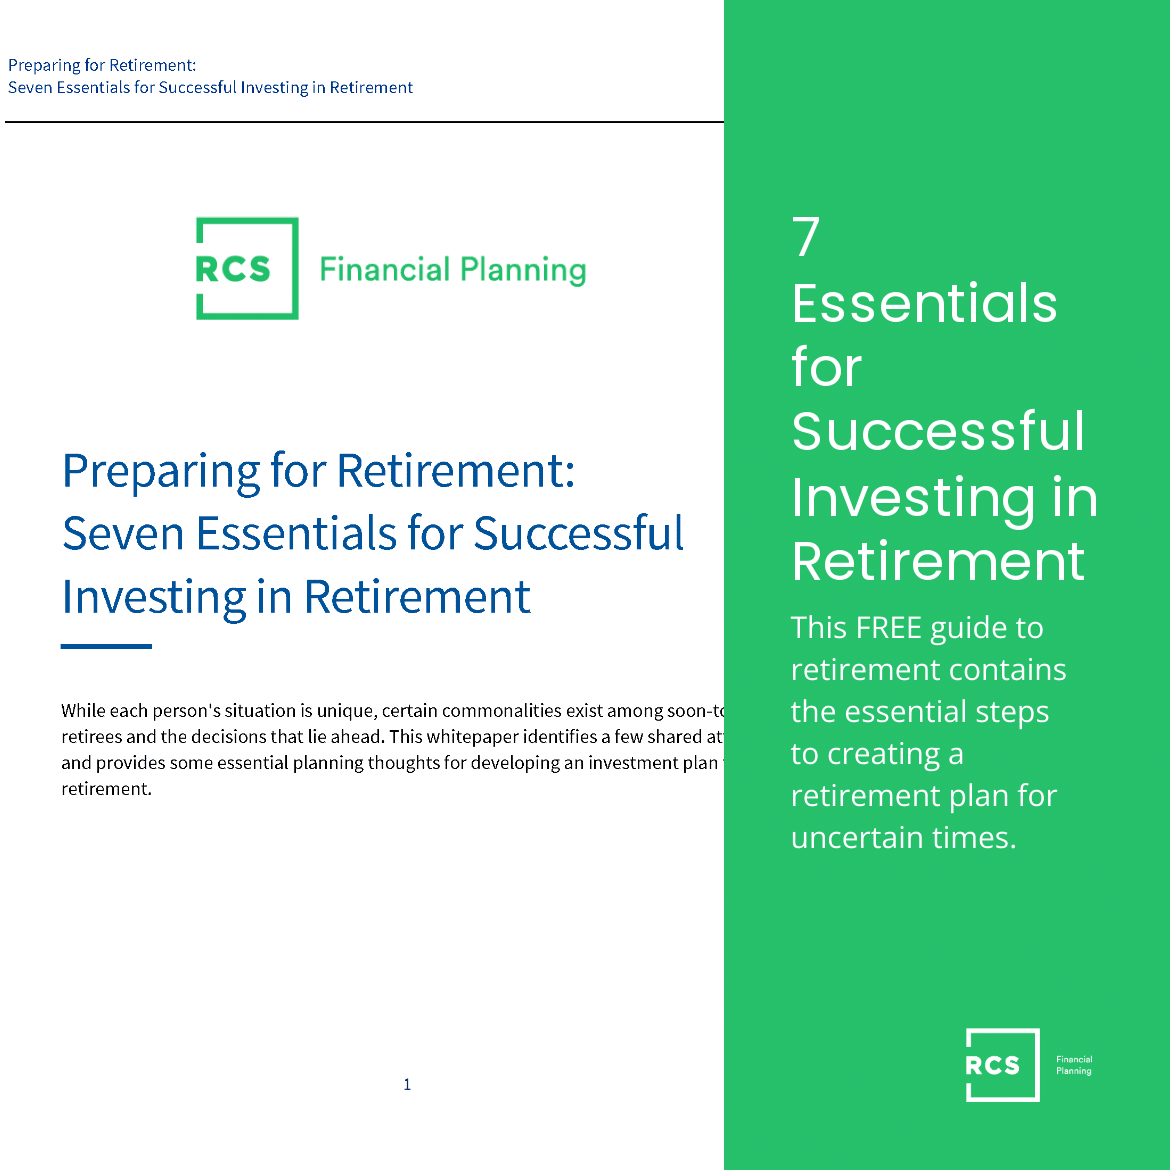 7 Essentials for Successful Investing in Retirement